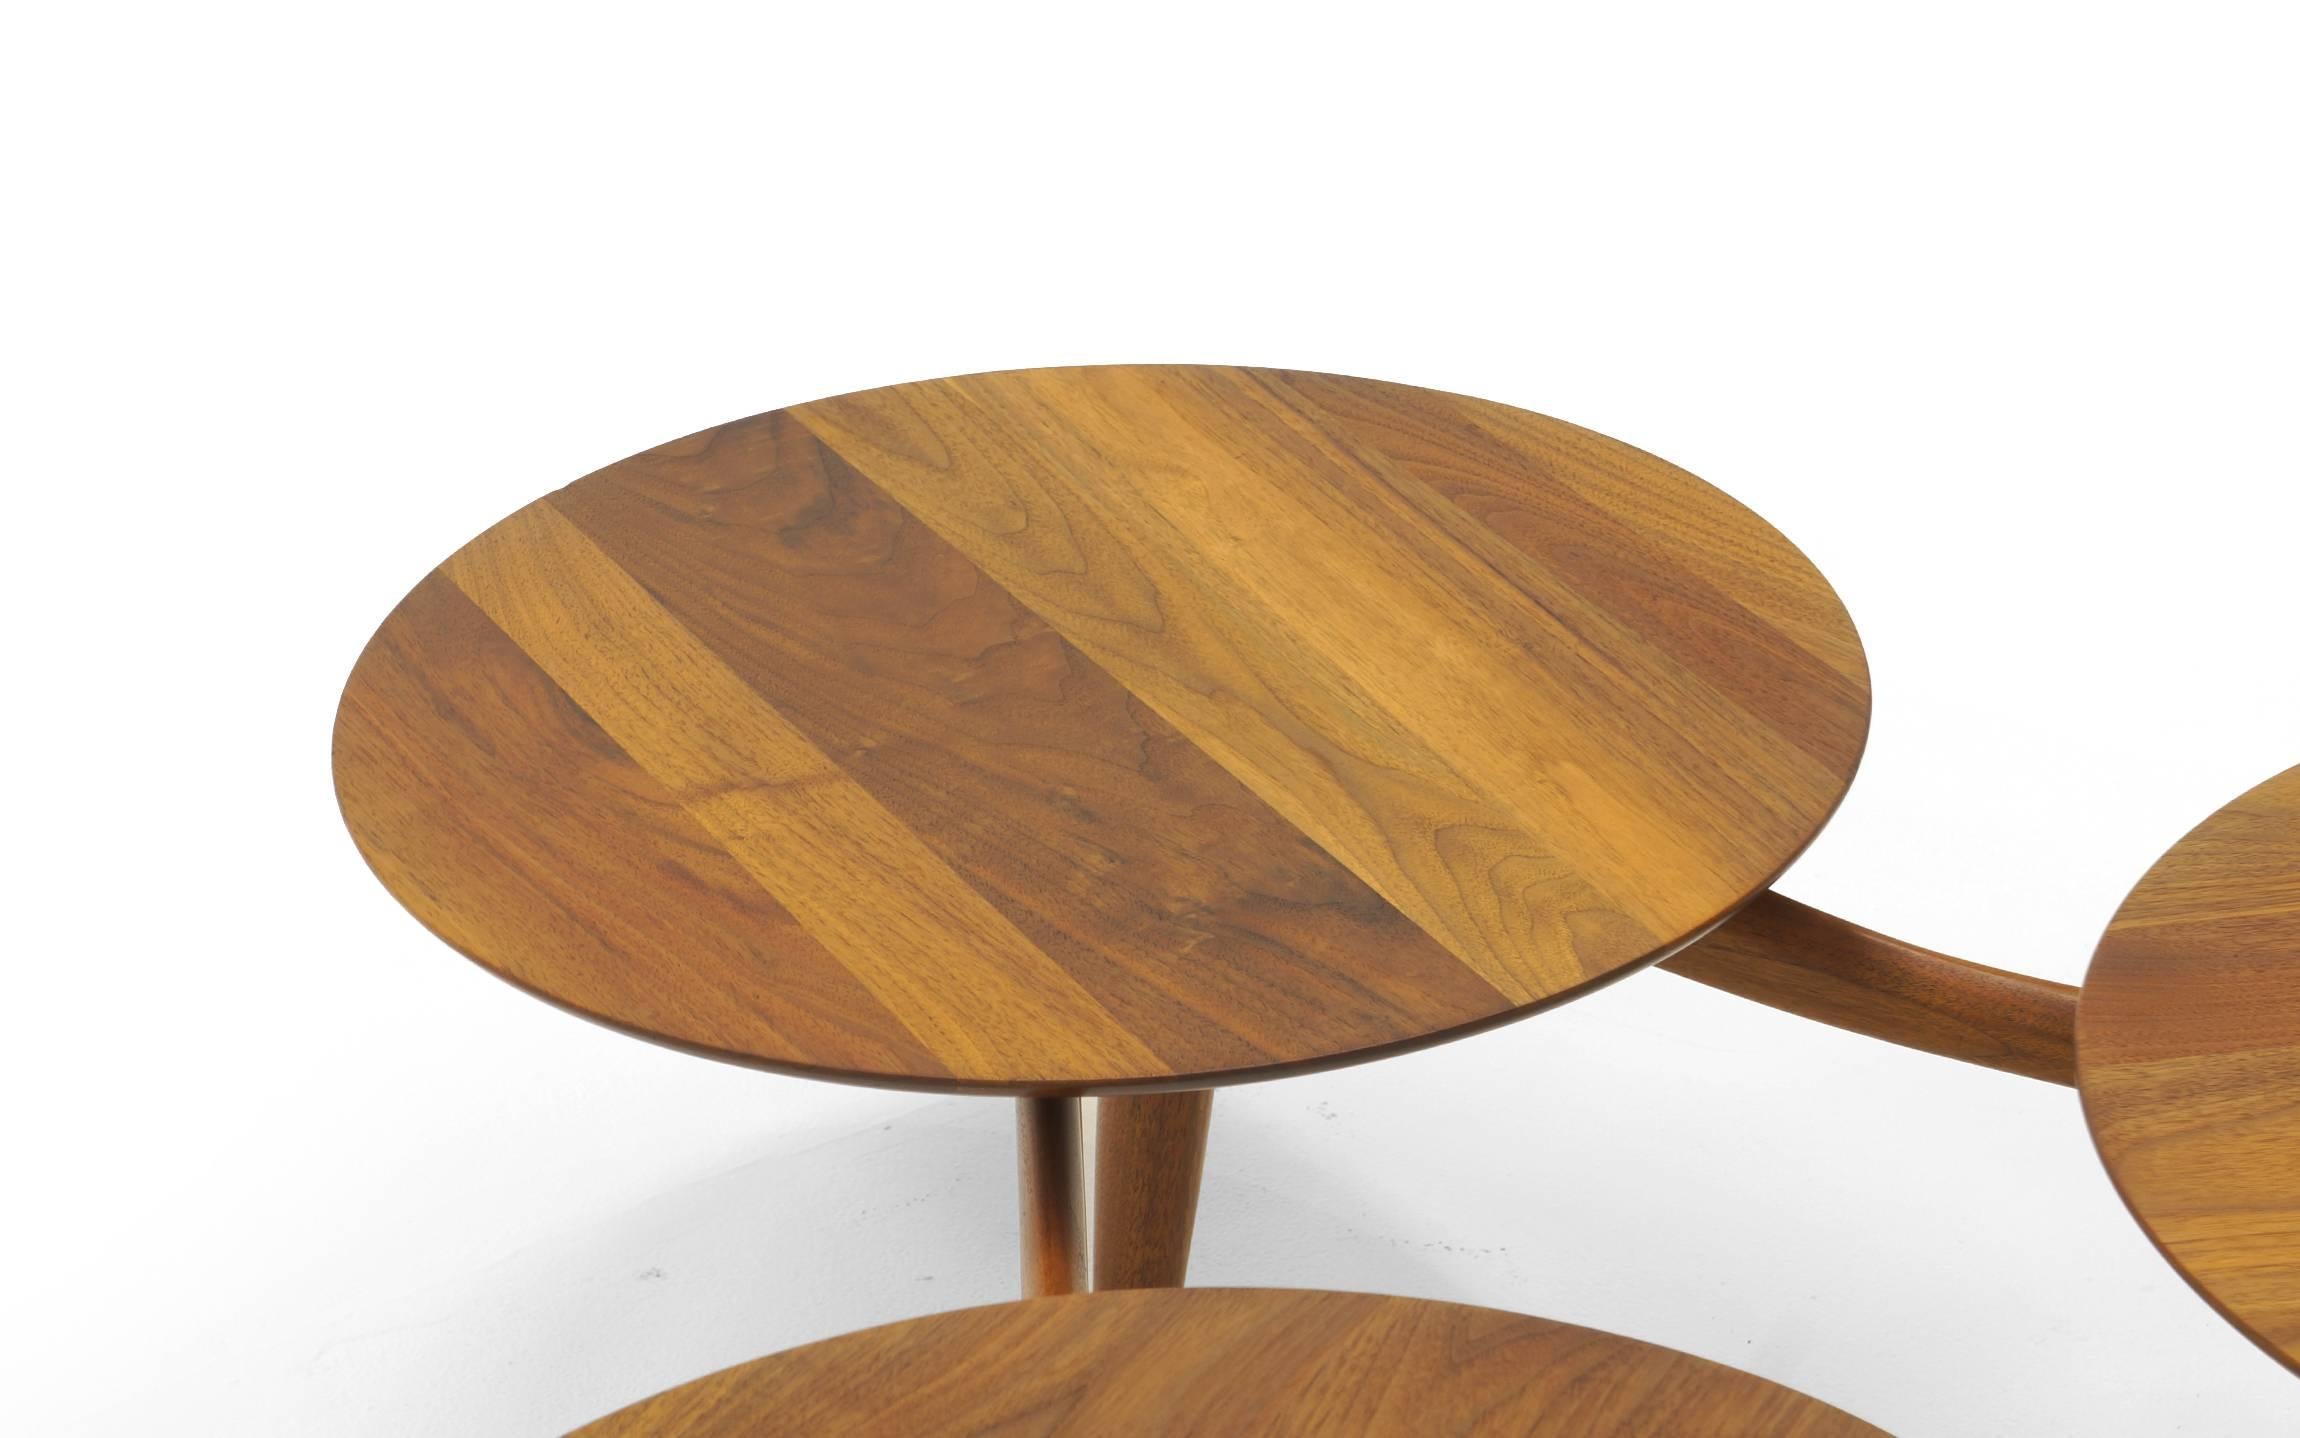 Scandinavian Modern Danish Modern Teak Coffee Table, Three Round Surfaces, Style of Greta Grossman